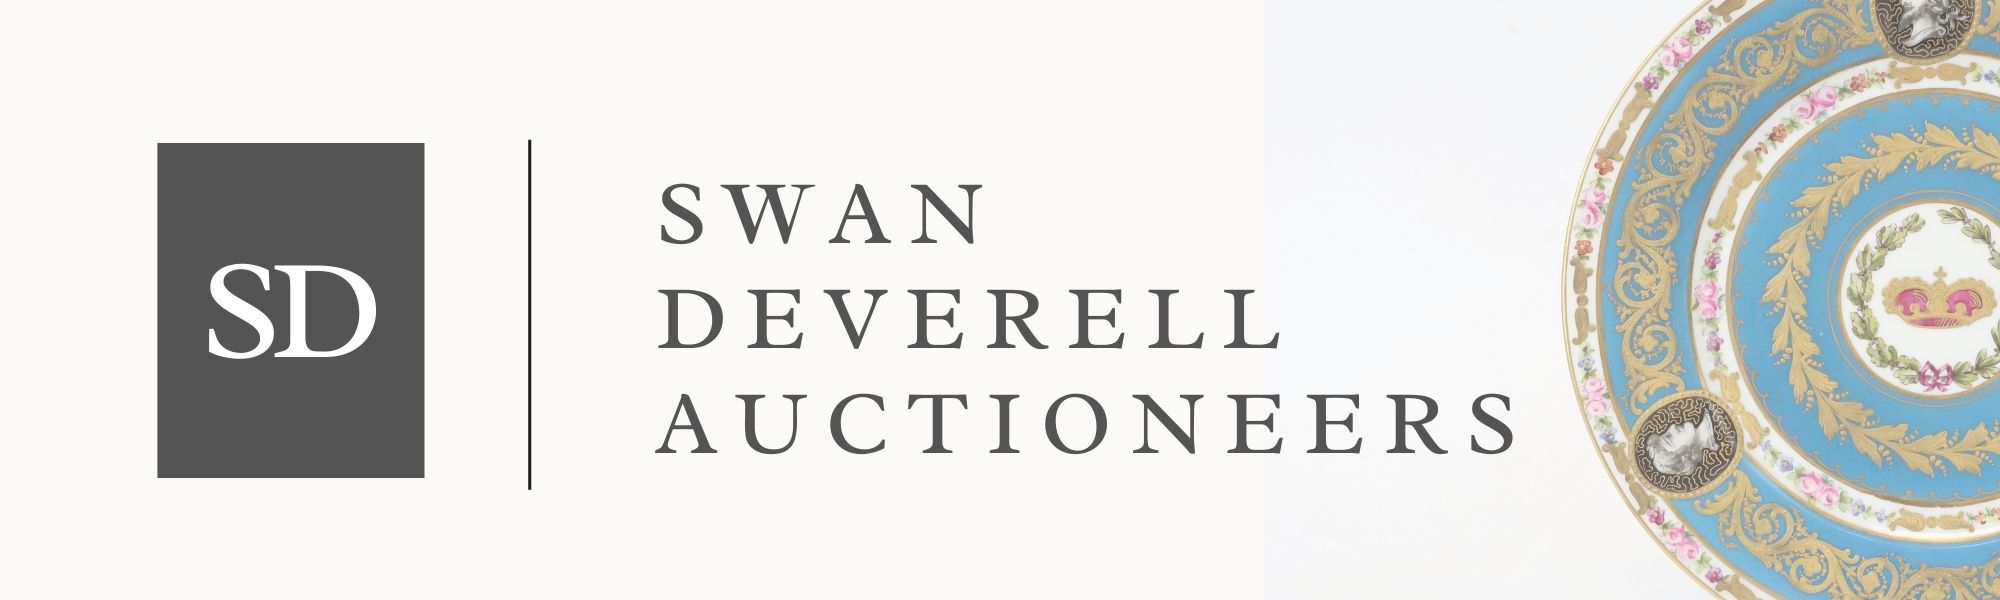 Swan Deverell Auctioneers